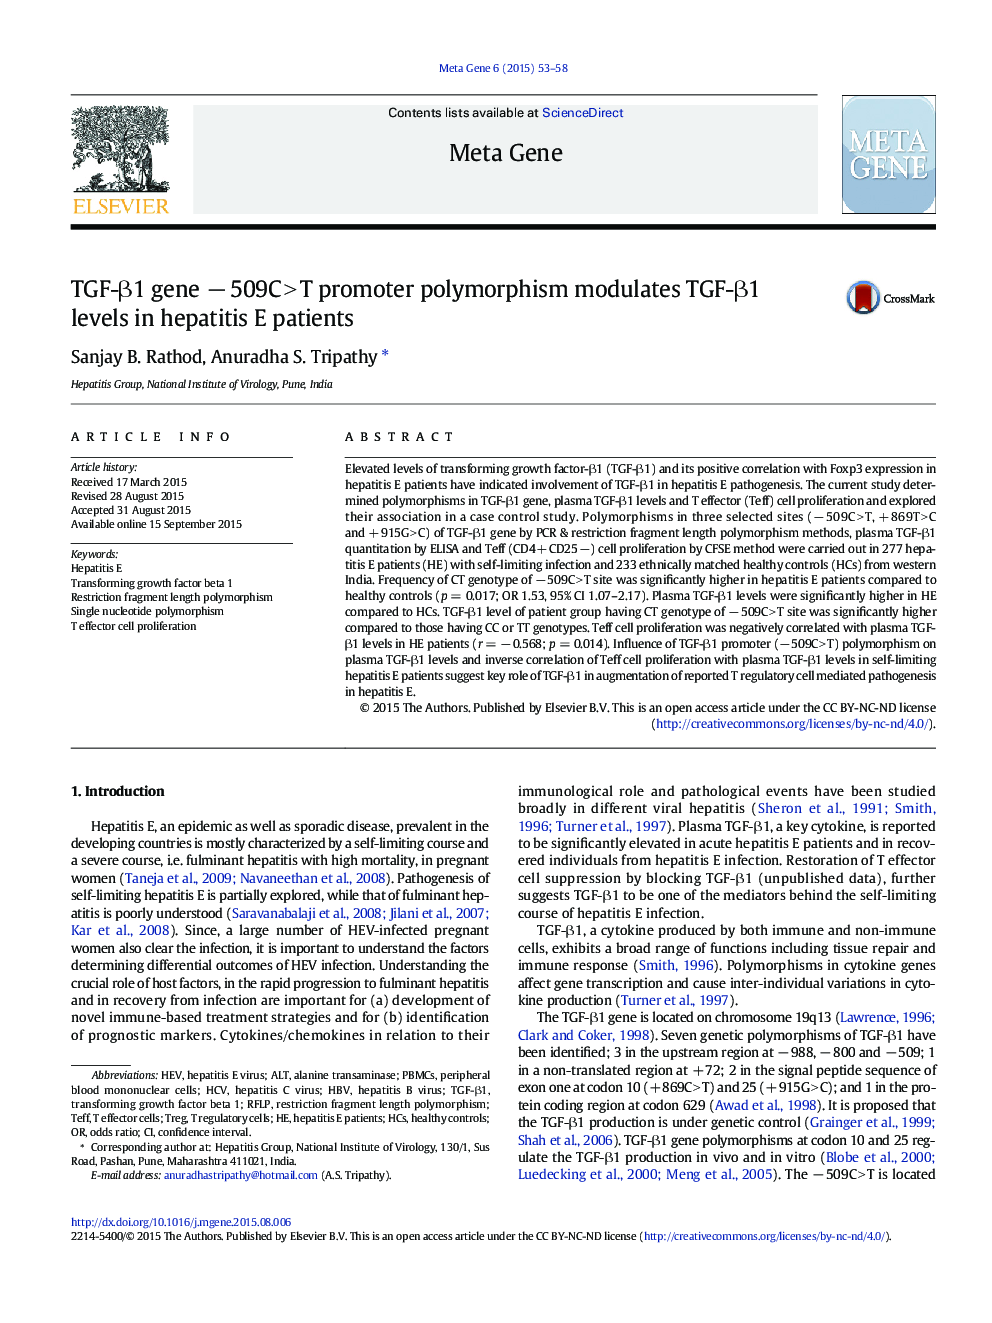 TGF-β1 gene − 509C > T promoter polymorphism modulates TGF-β1 levels in hepatitis E patients